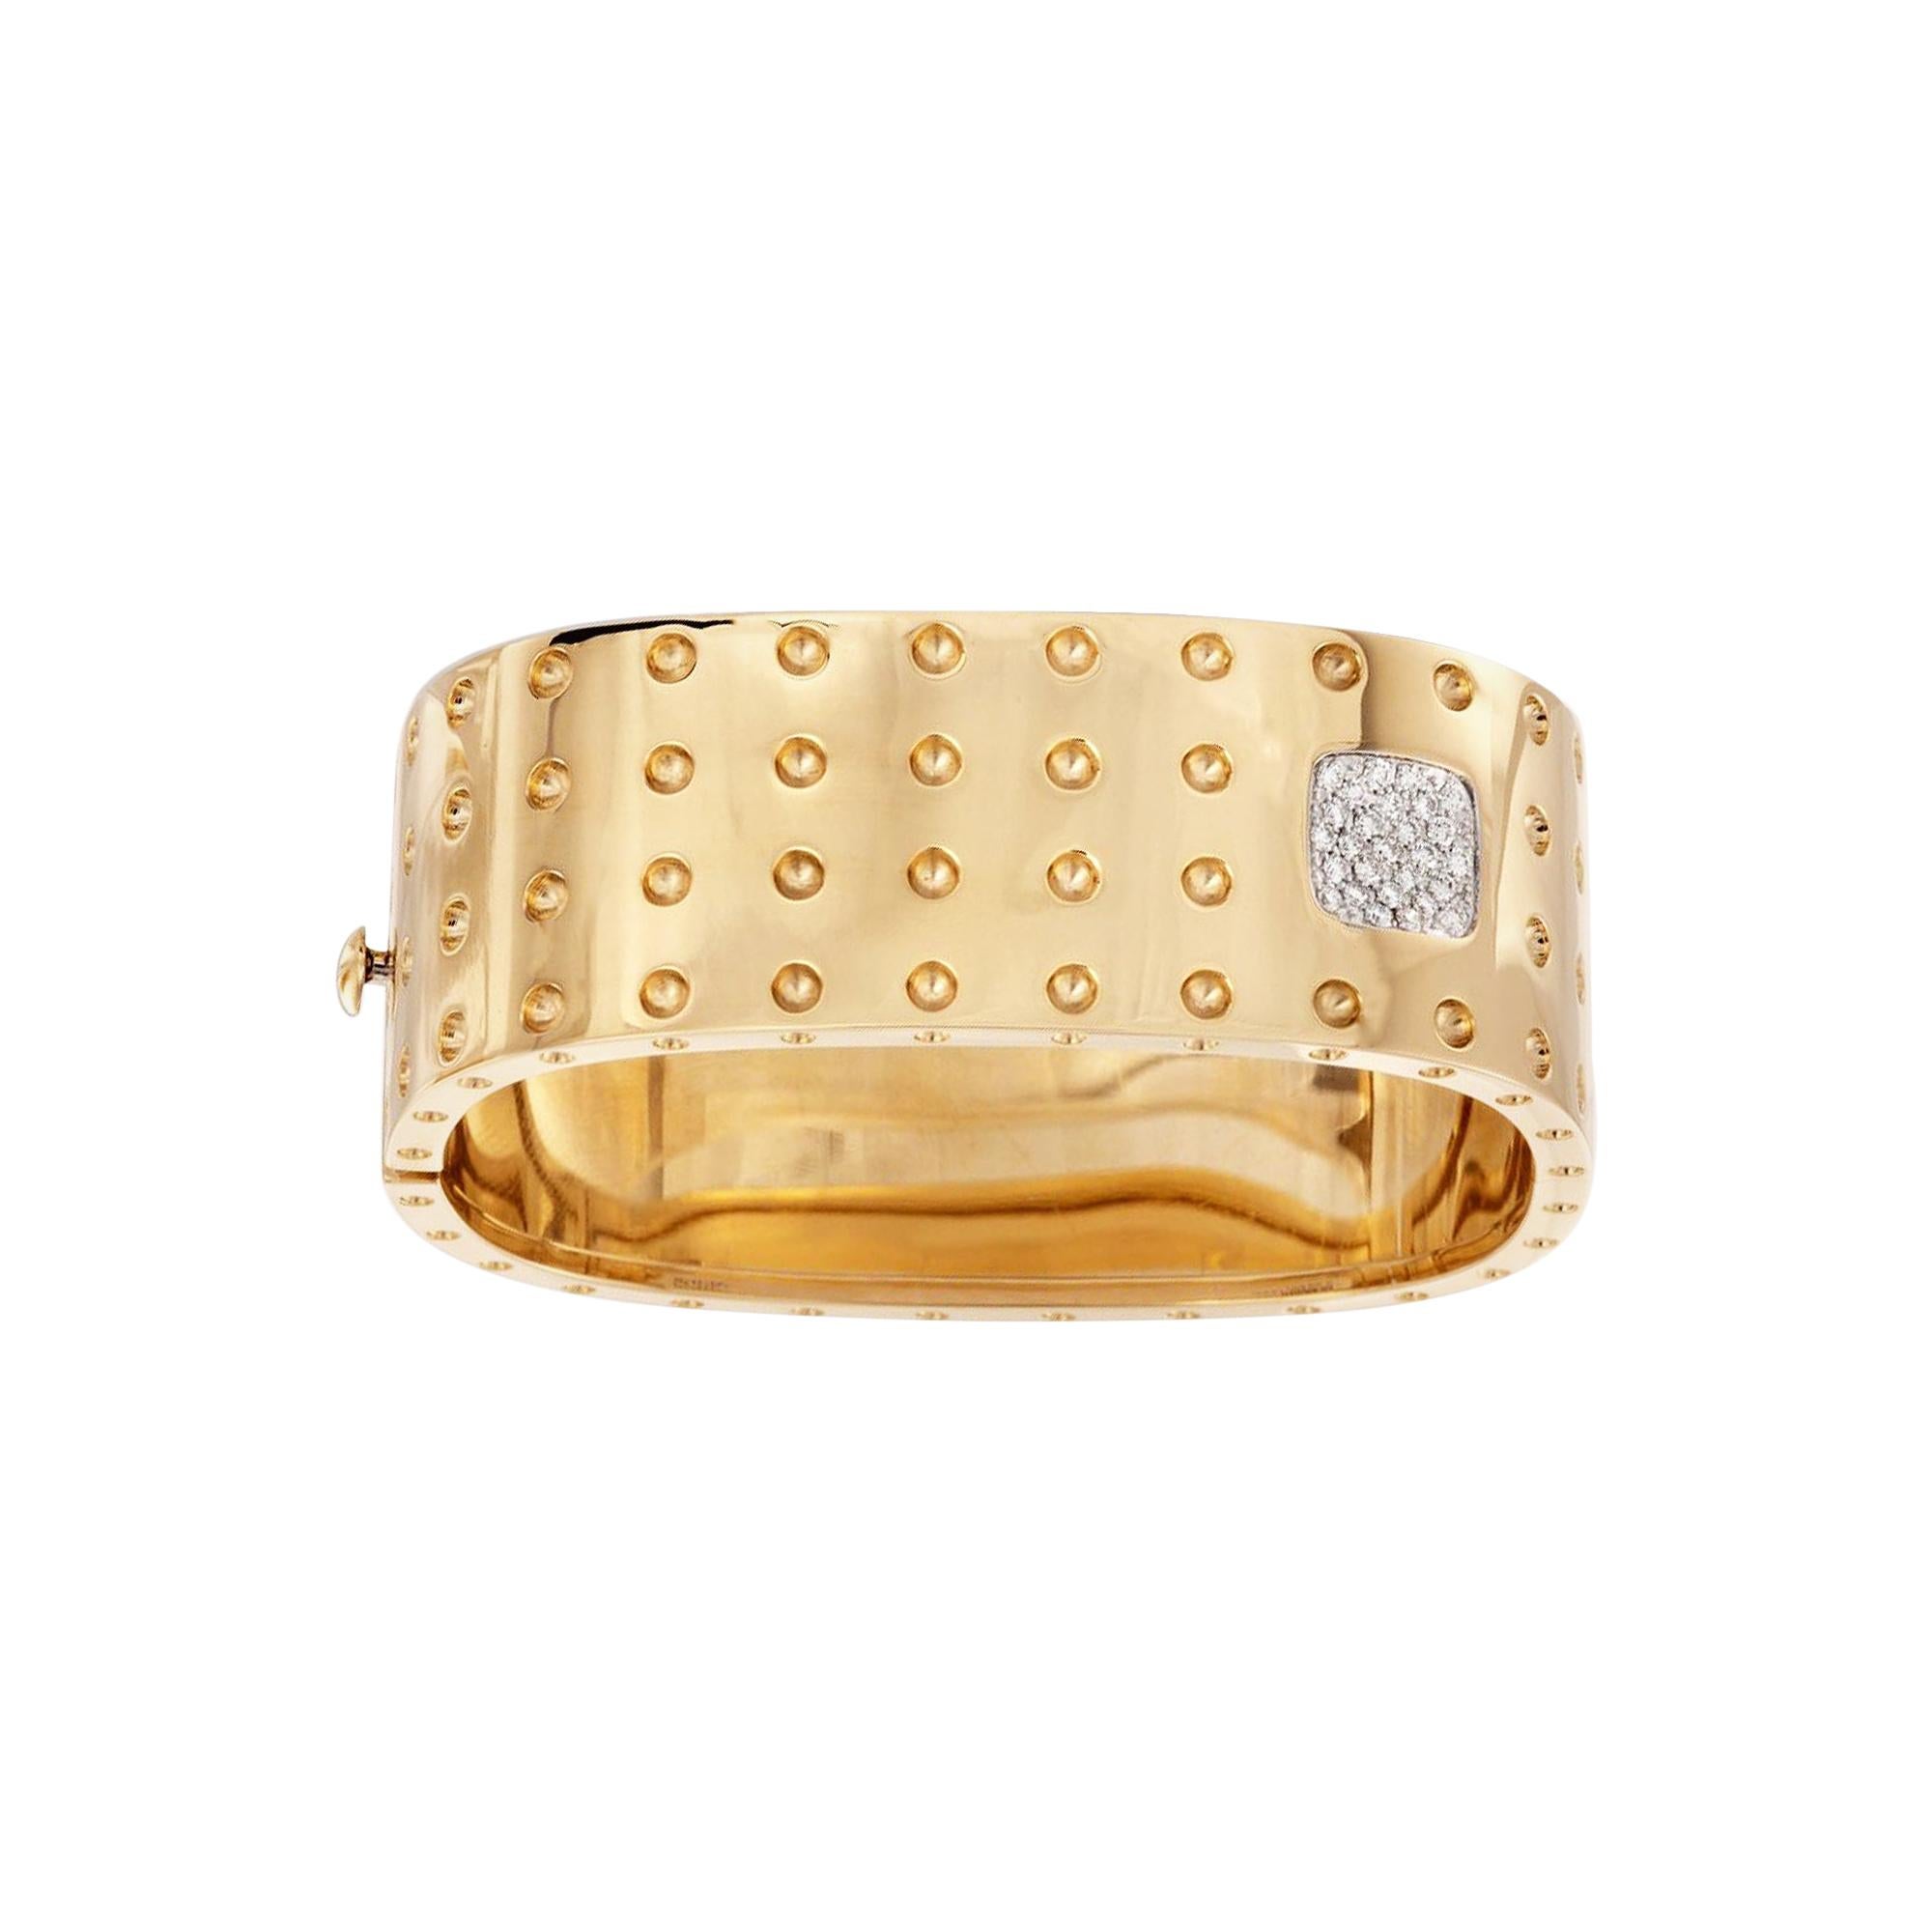 Roberto Coin Pois Moi Yellow Gold and Diamond Bangle Bracelet